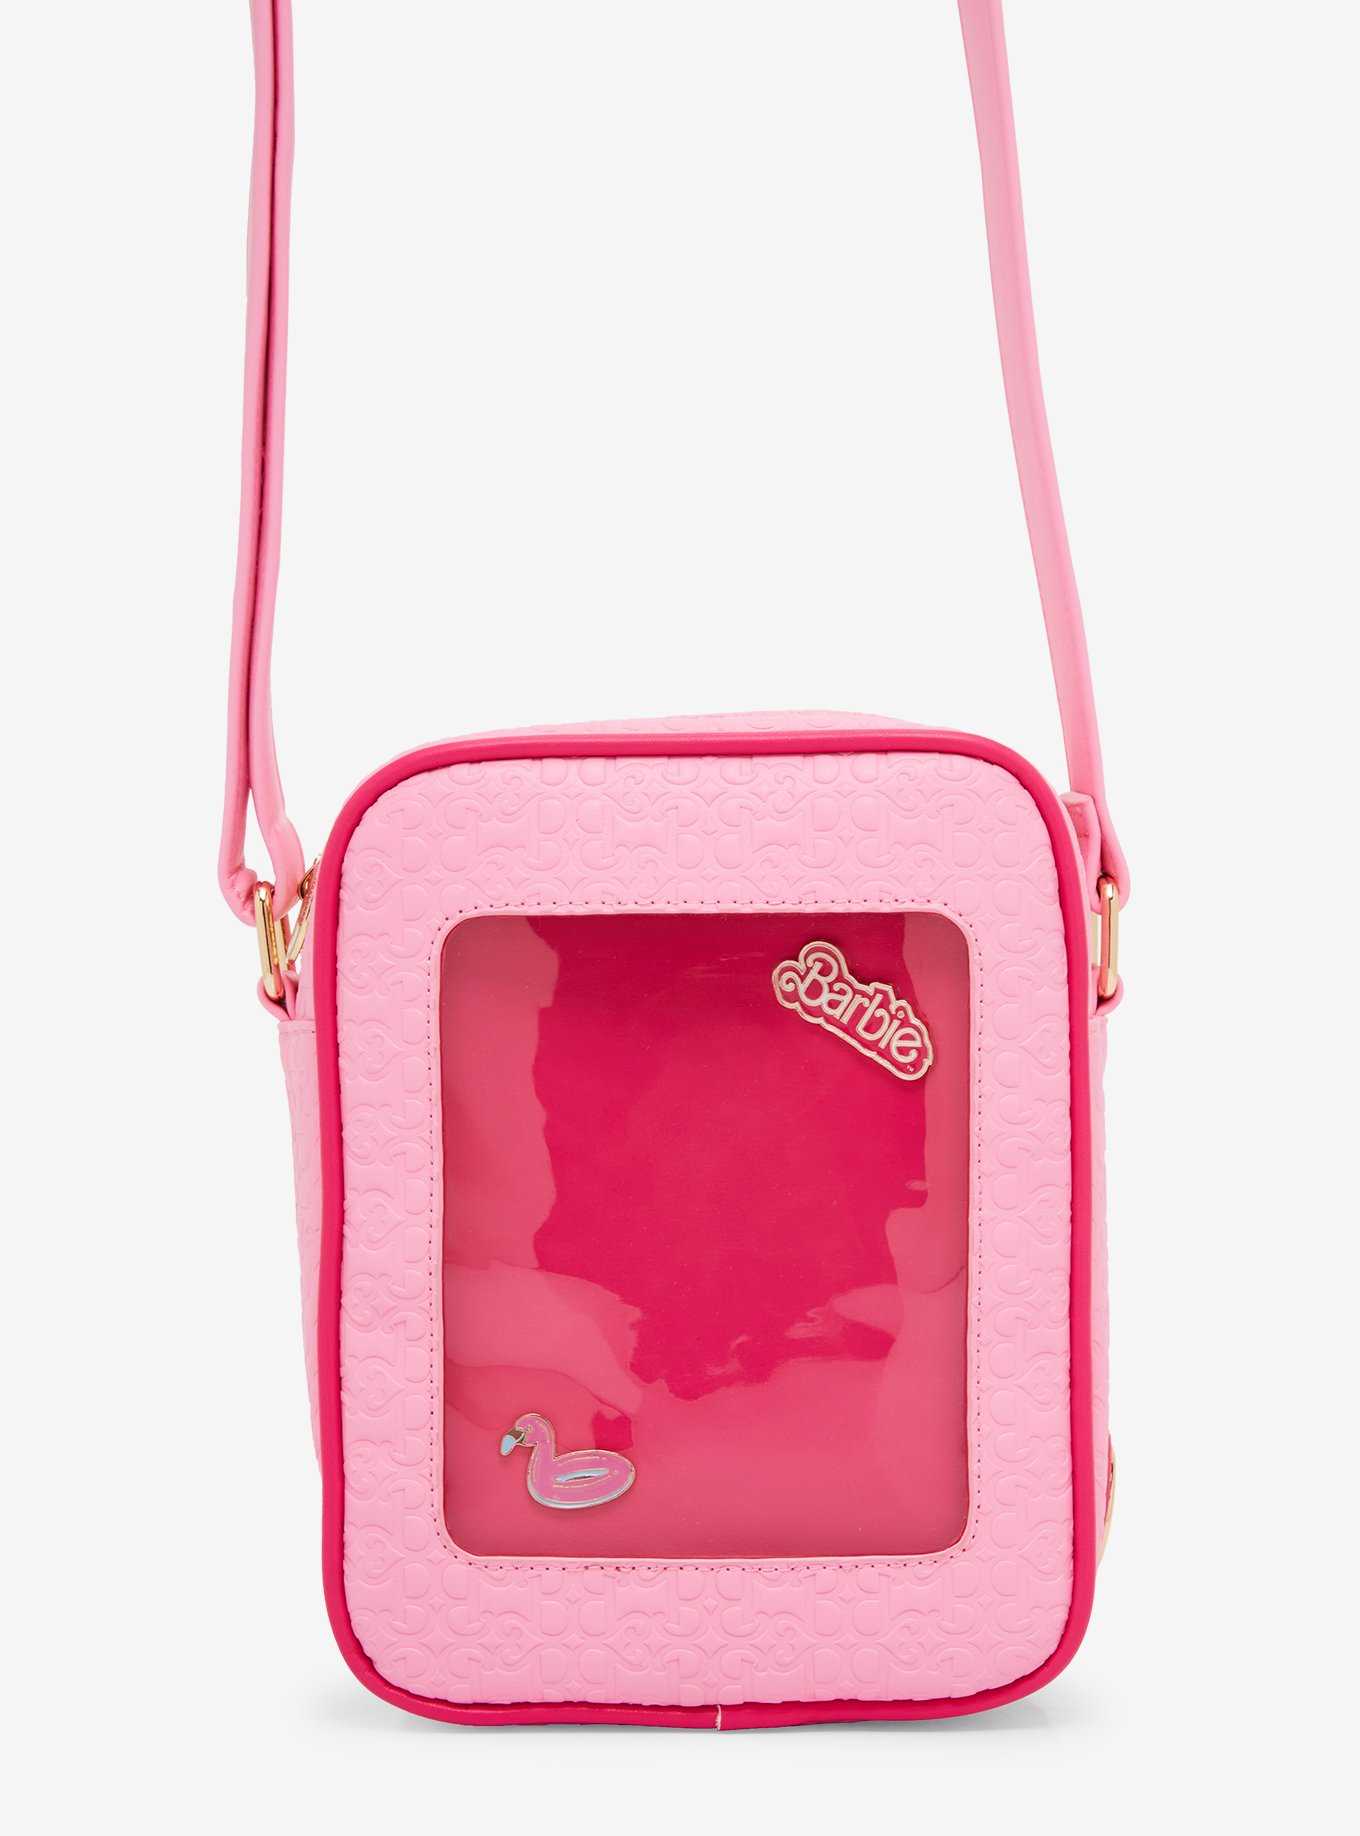 Pin on dream handbags